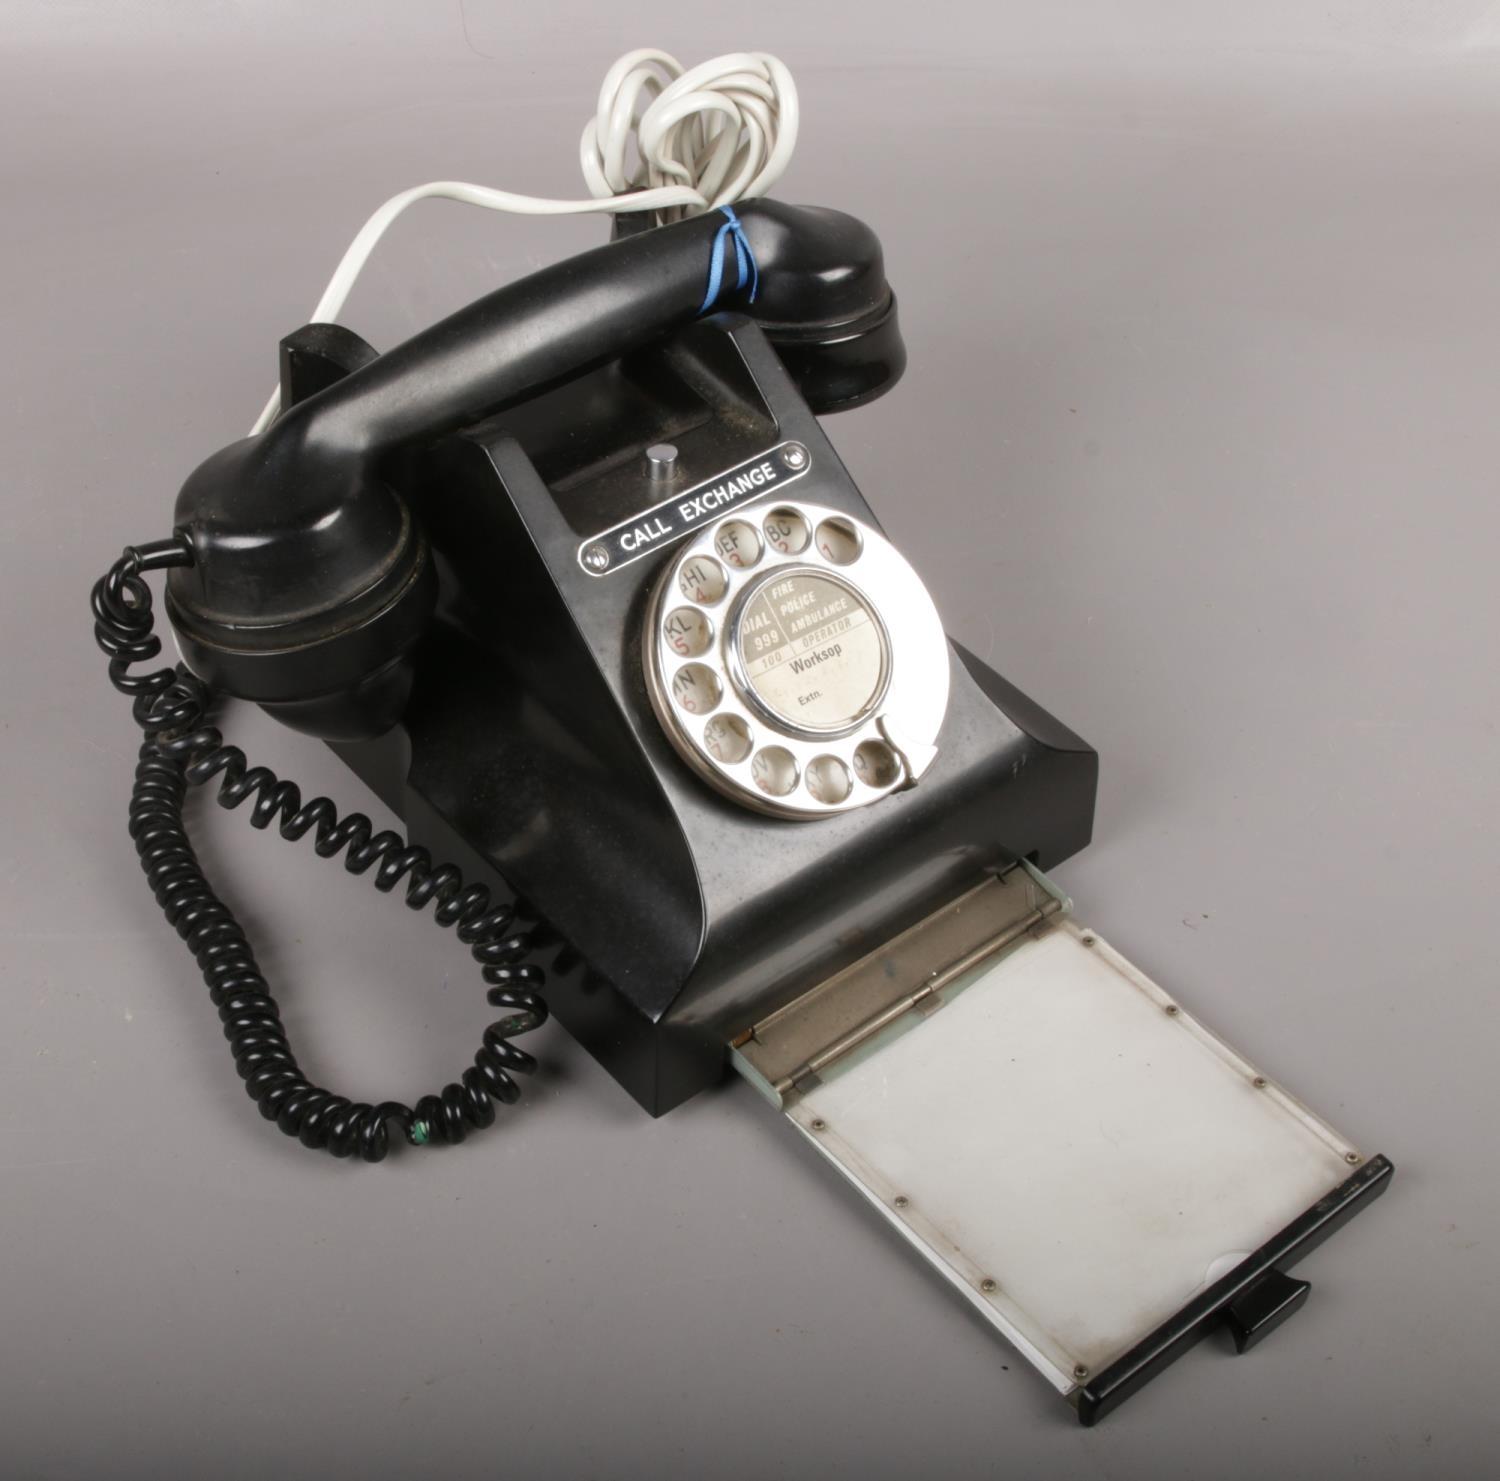 A black vintage rotary dial telephone.